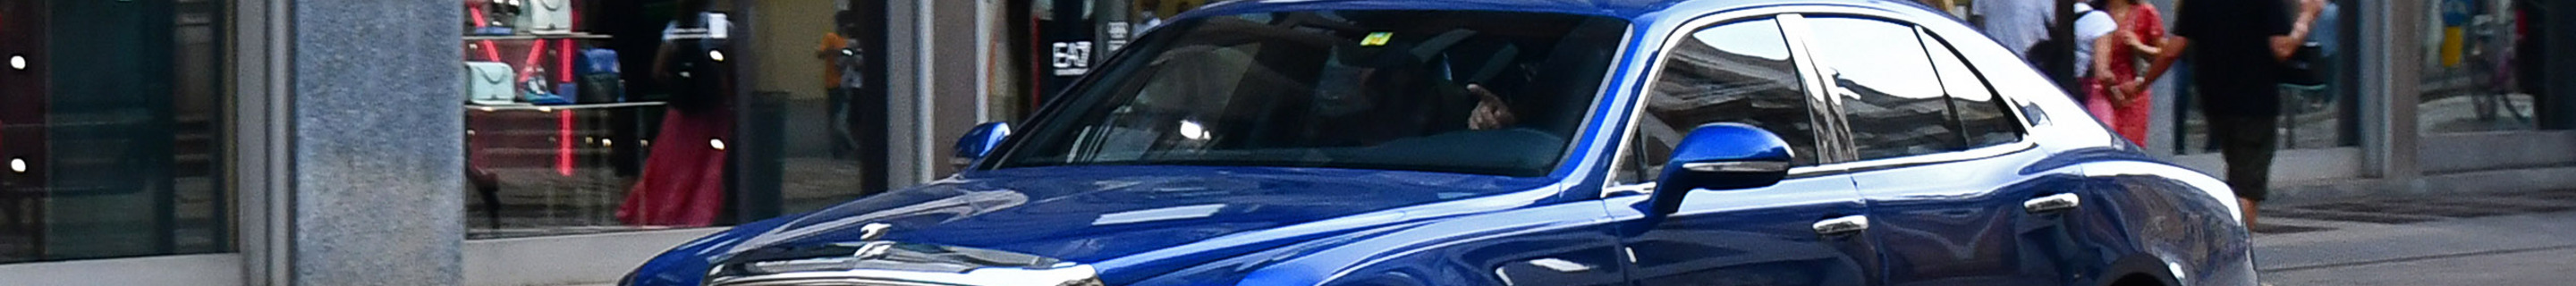 Bentley Mulsanne 2016